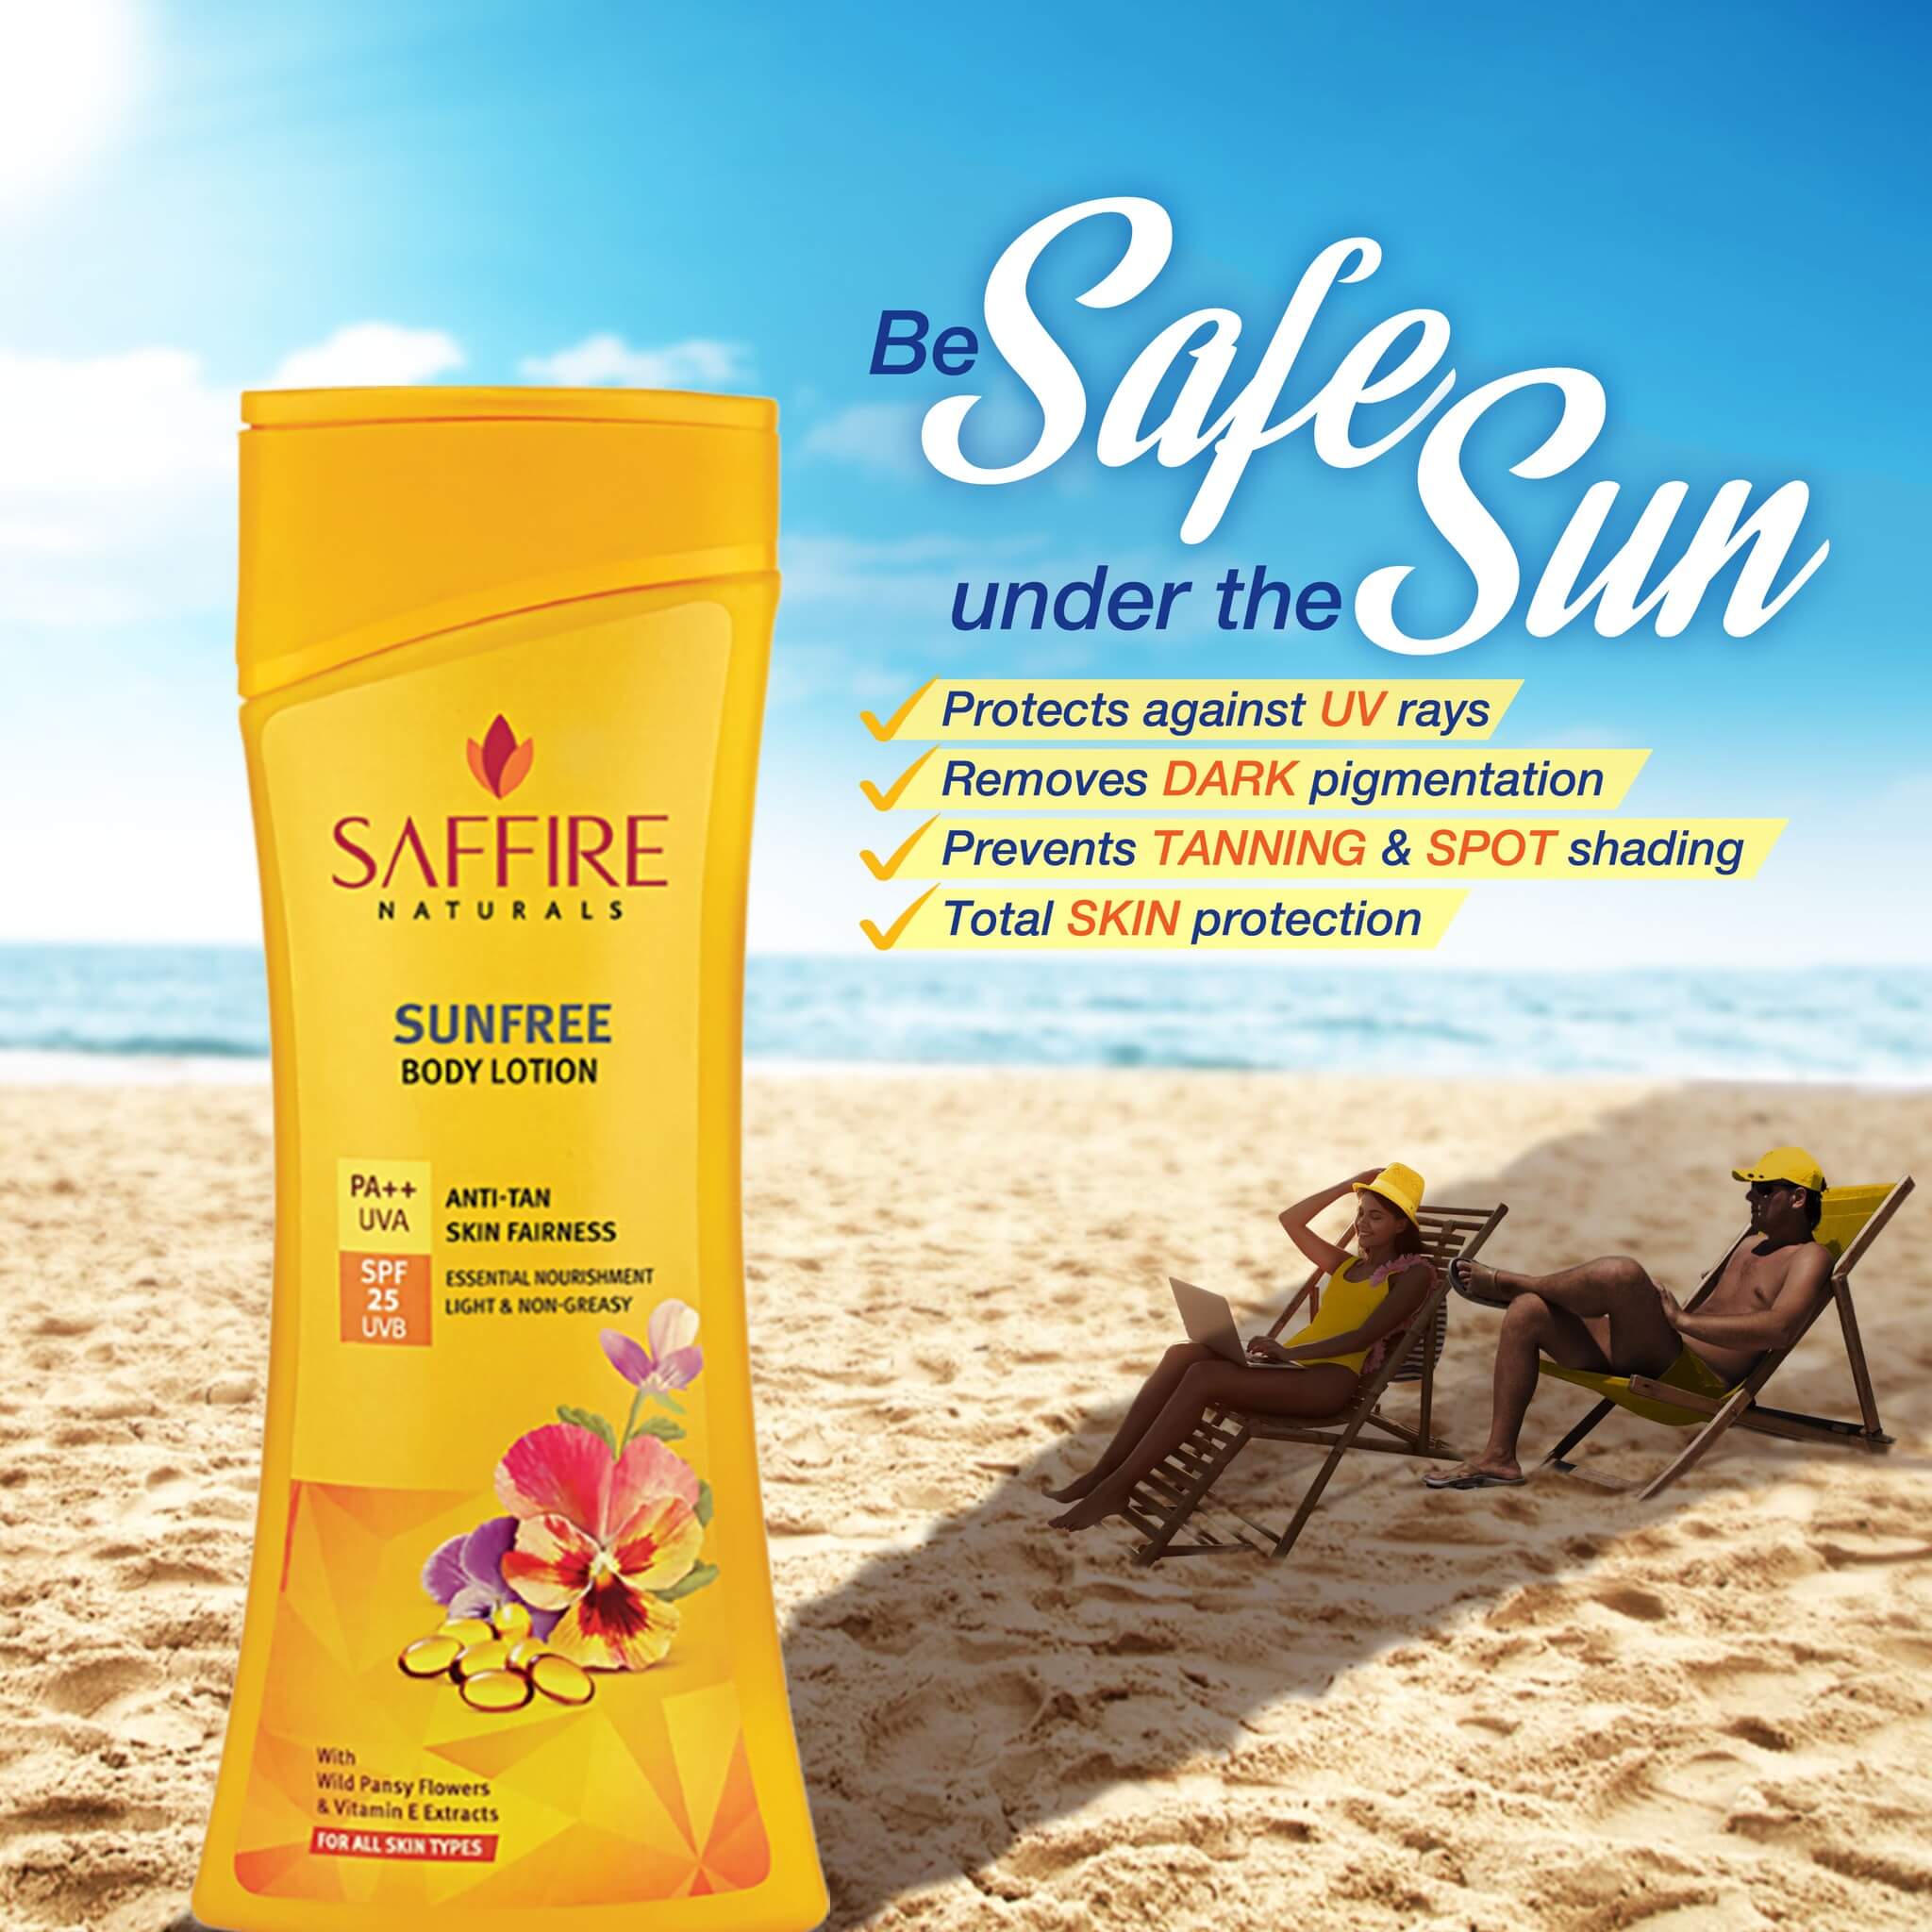 Saffire Naturals Sunfree SPF 25 PA ++ Body Lotion 300 ml